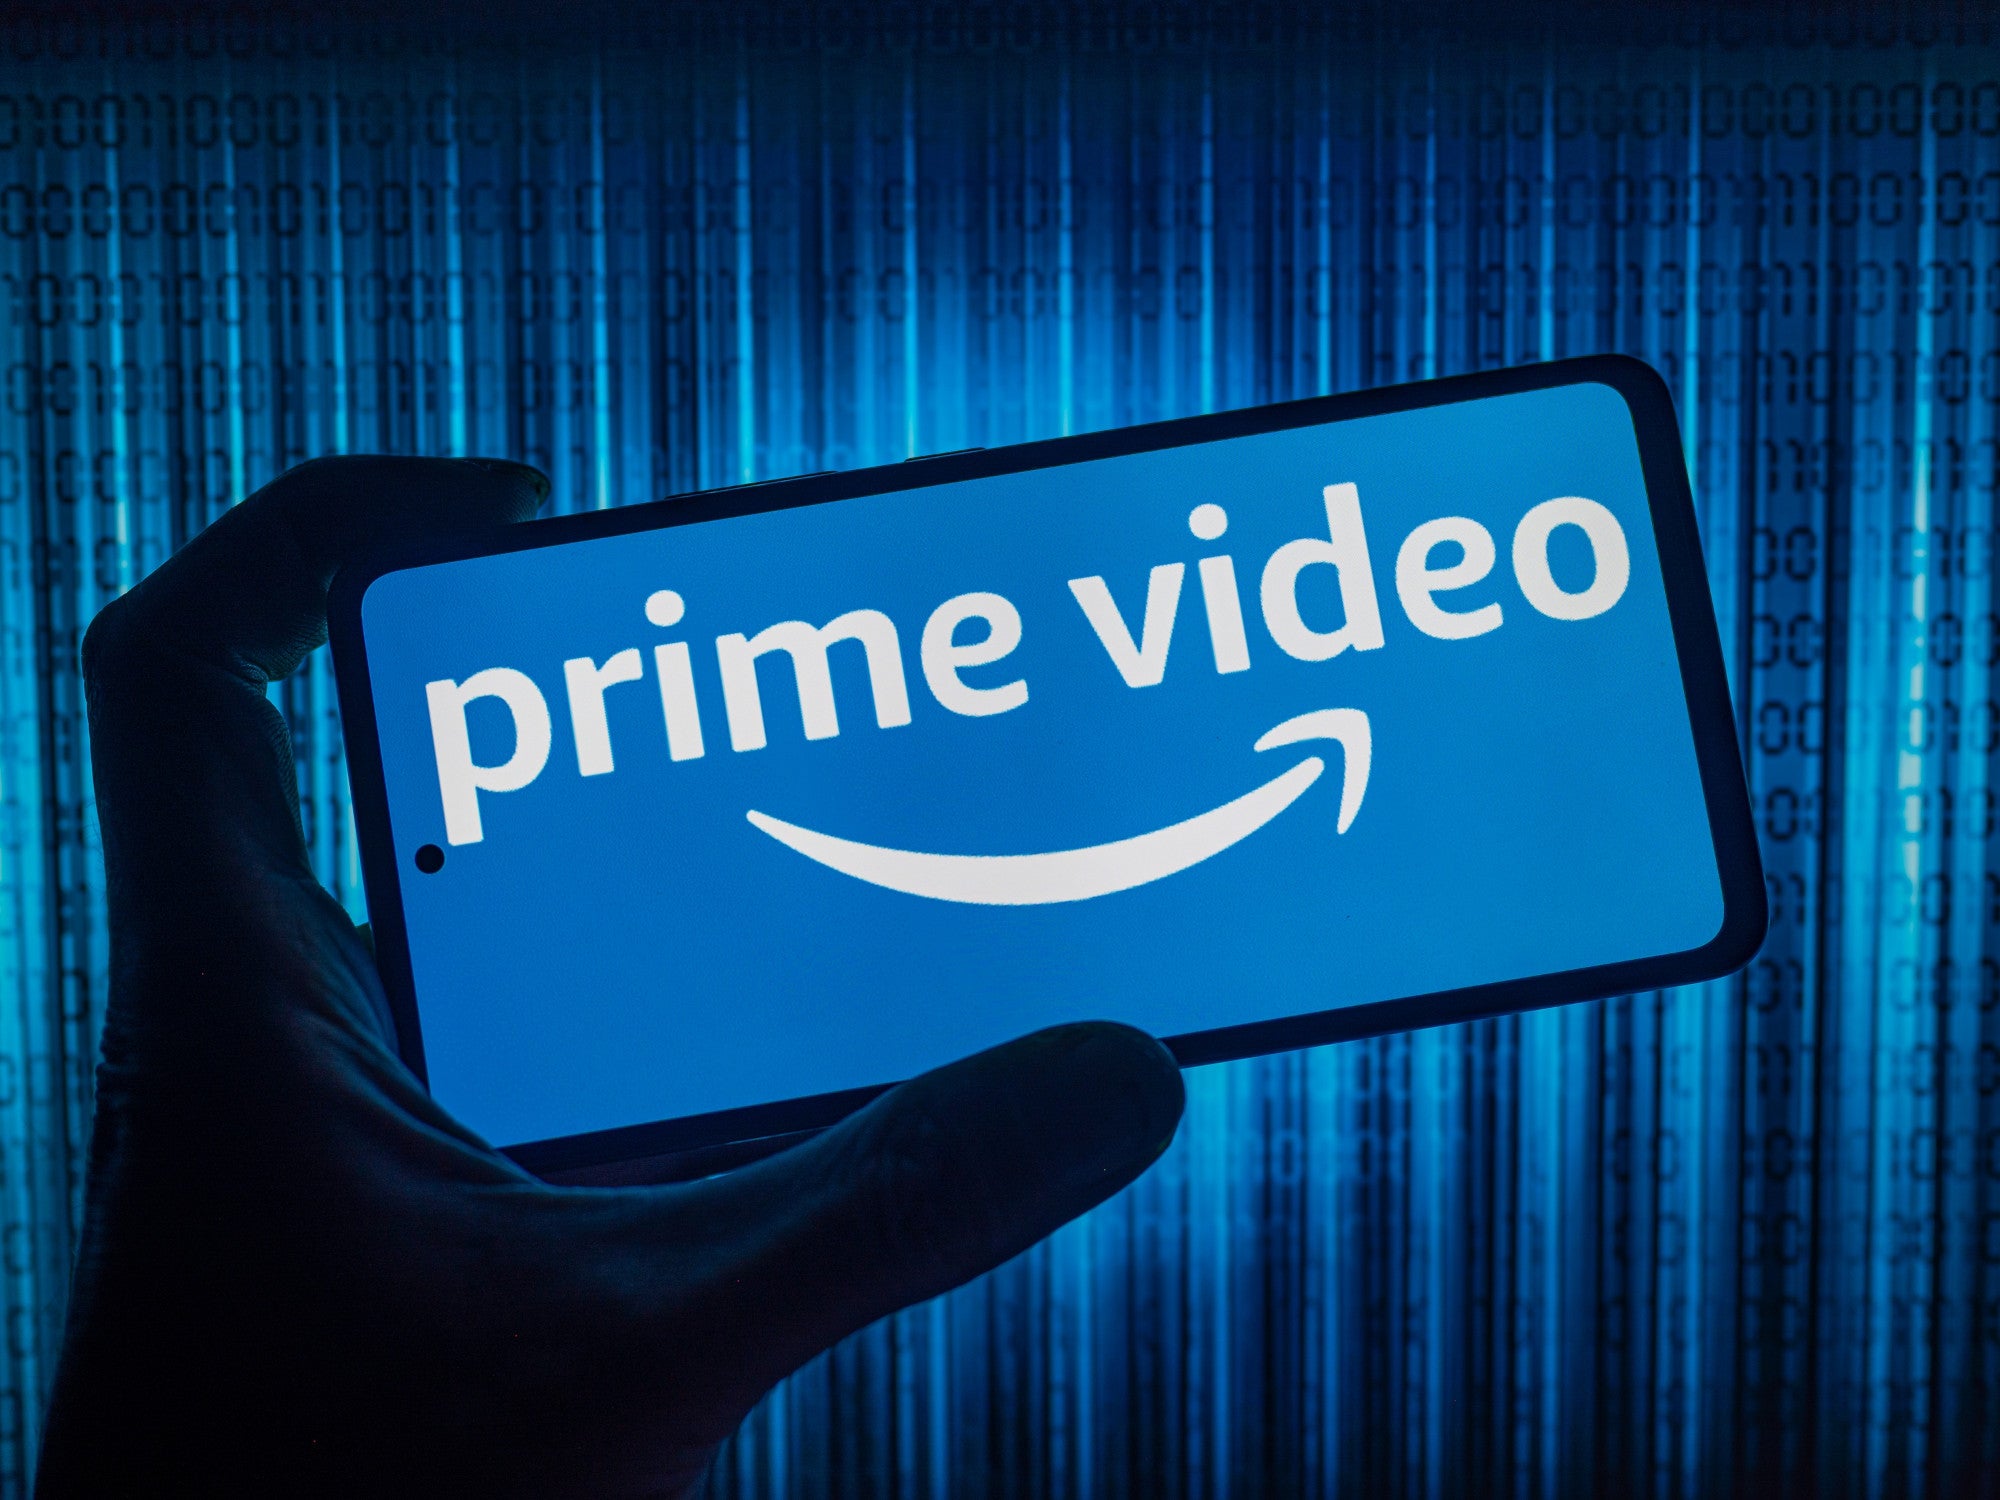 Amazon Prime Video Symbolbild